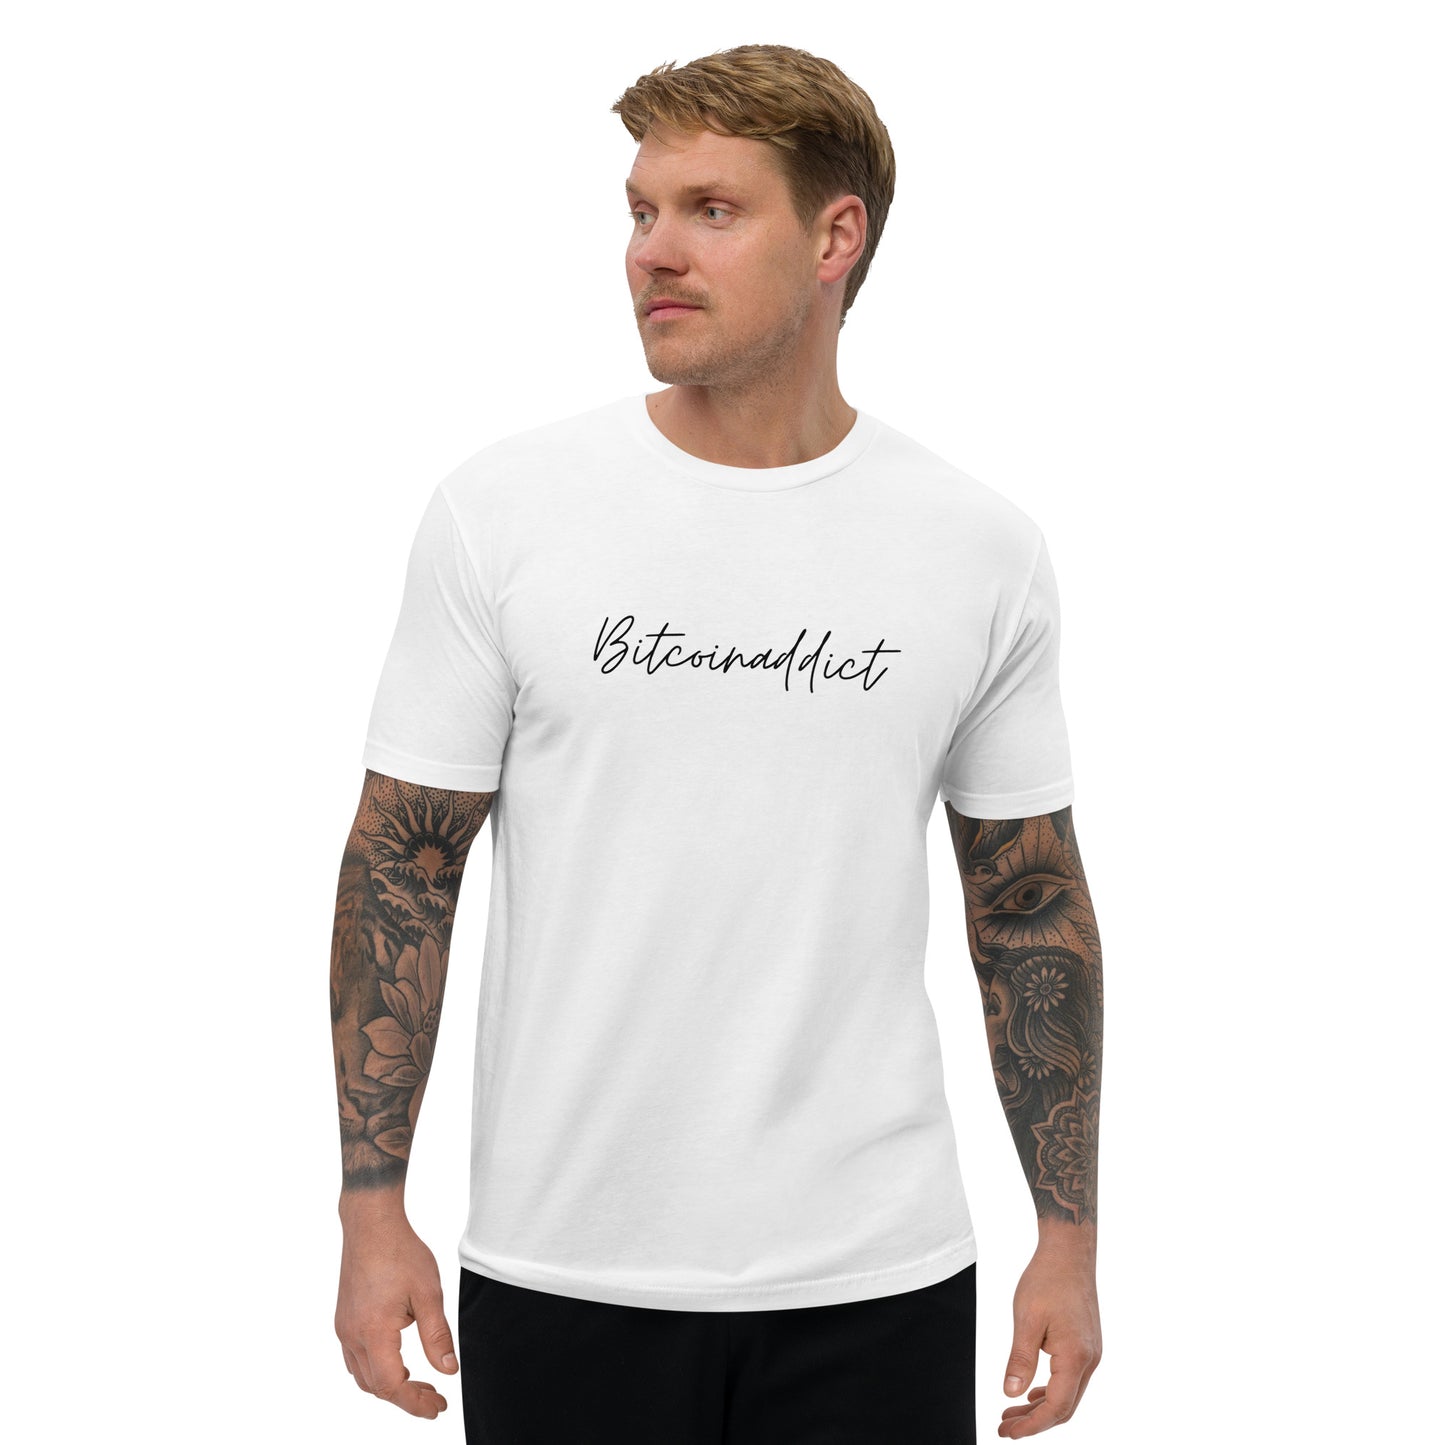 BITCOINADDICT T-Shirt